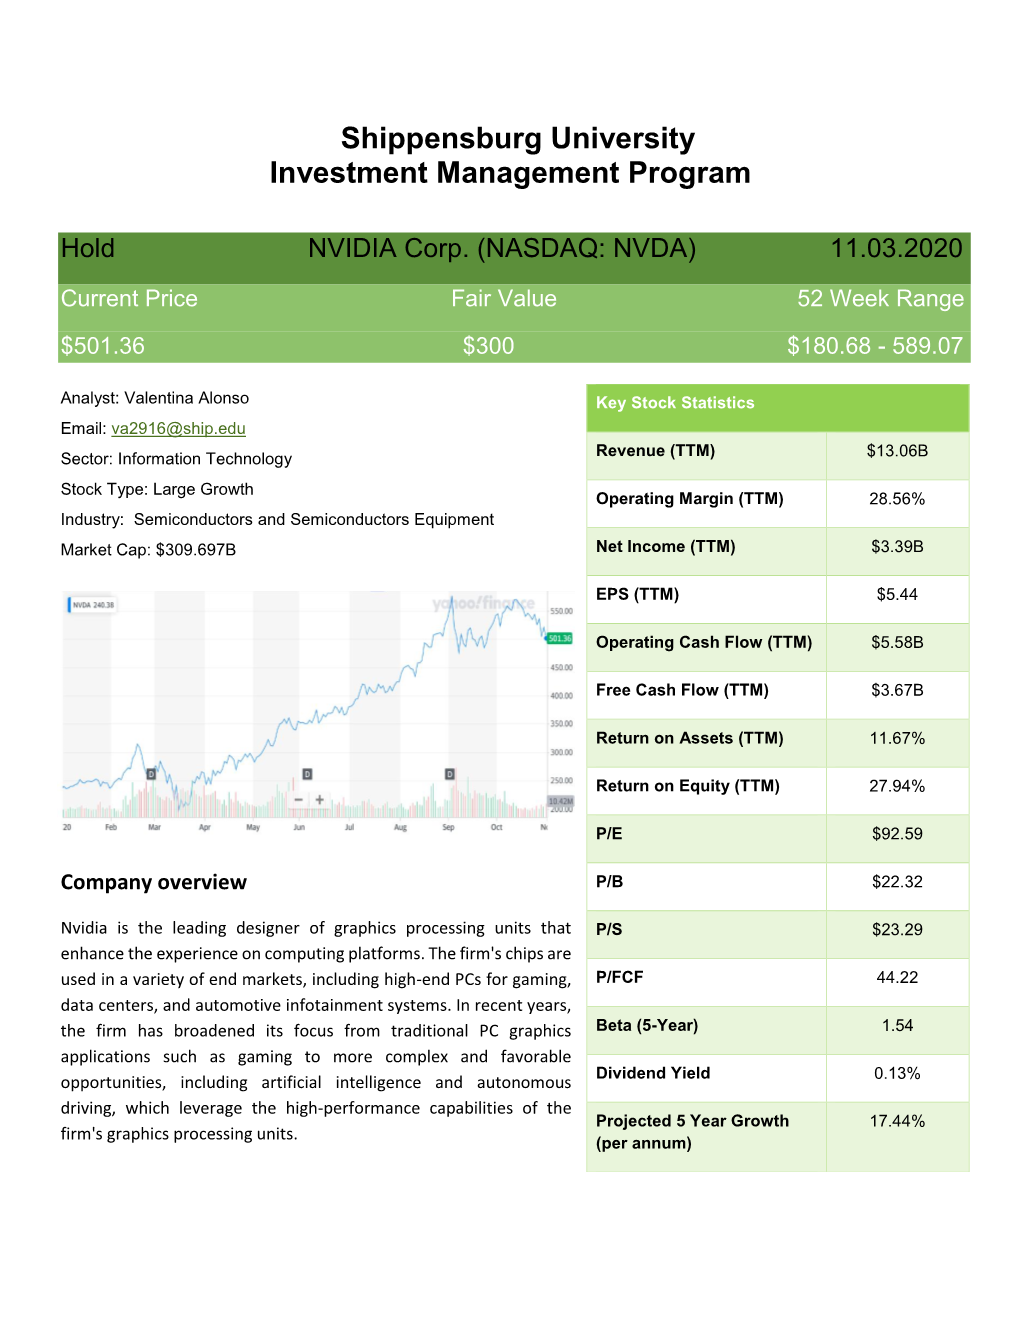 Shippensburg University Investment Management Program